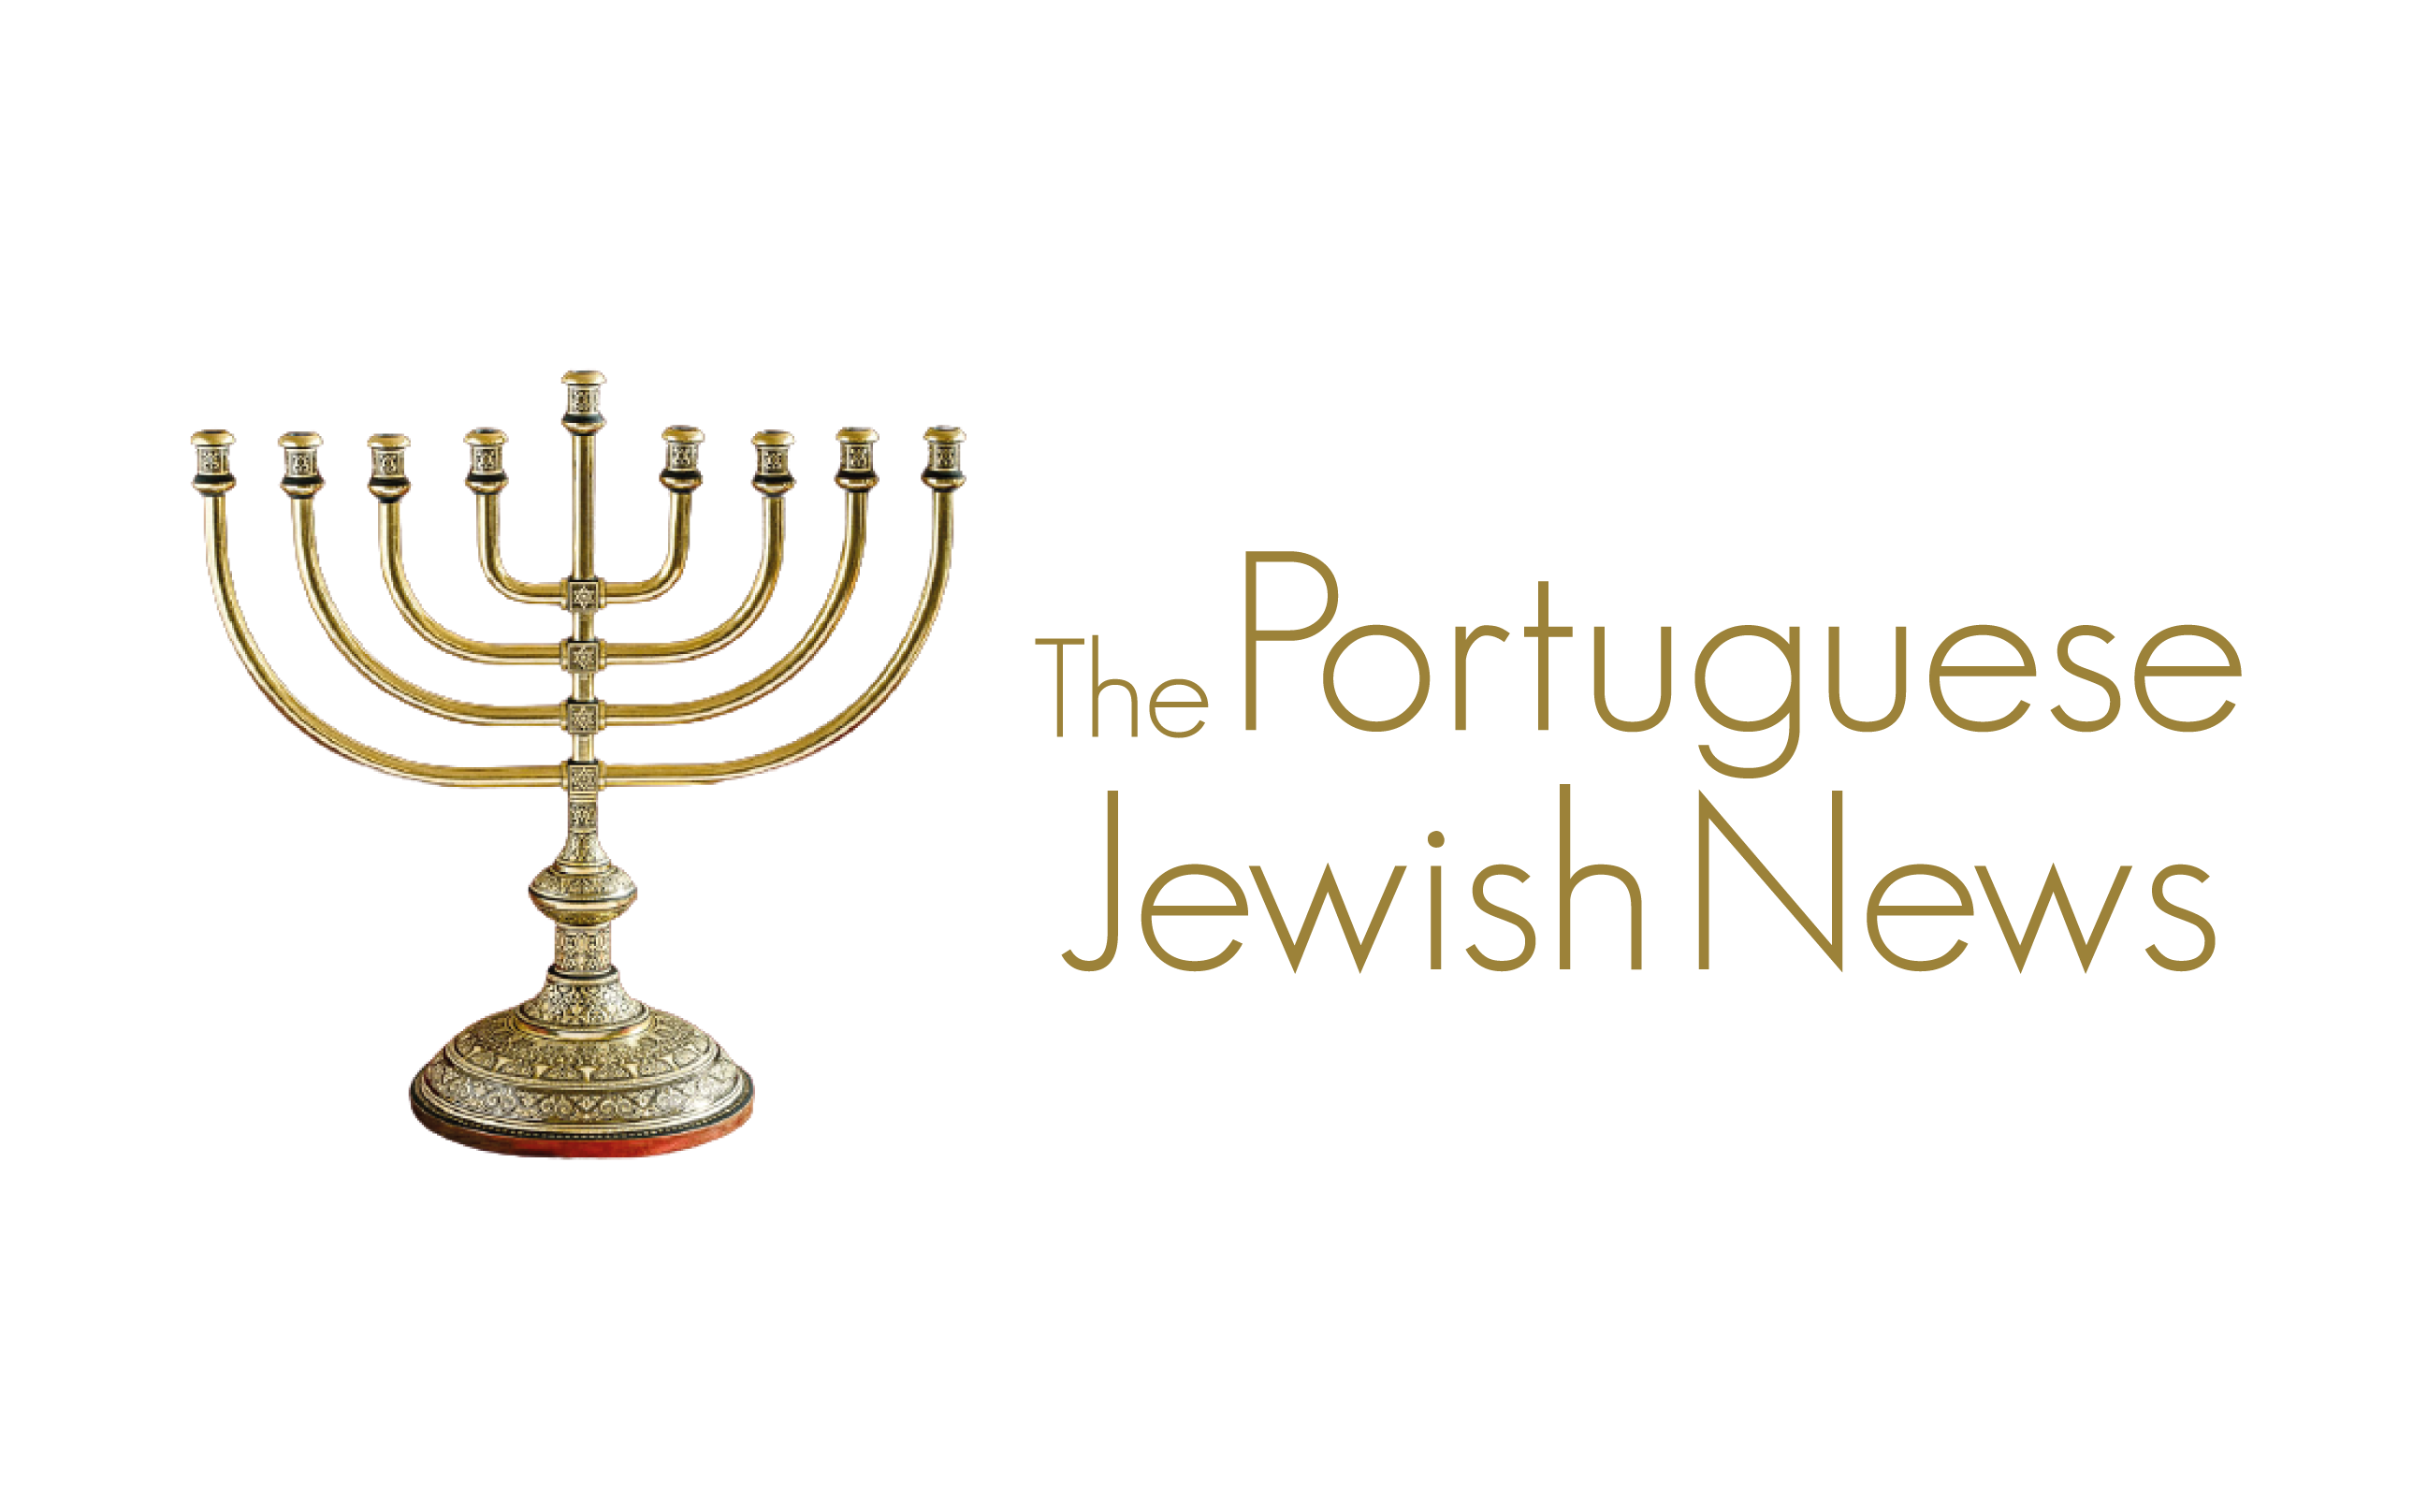 The Portuguese Jewish News